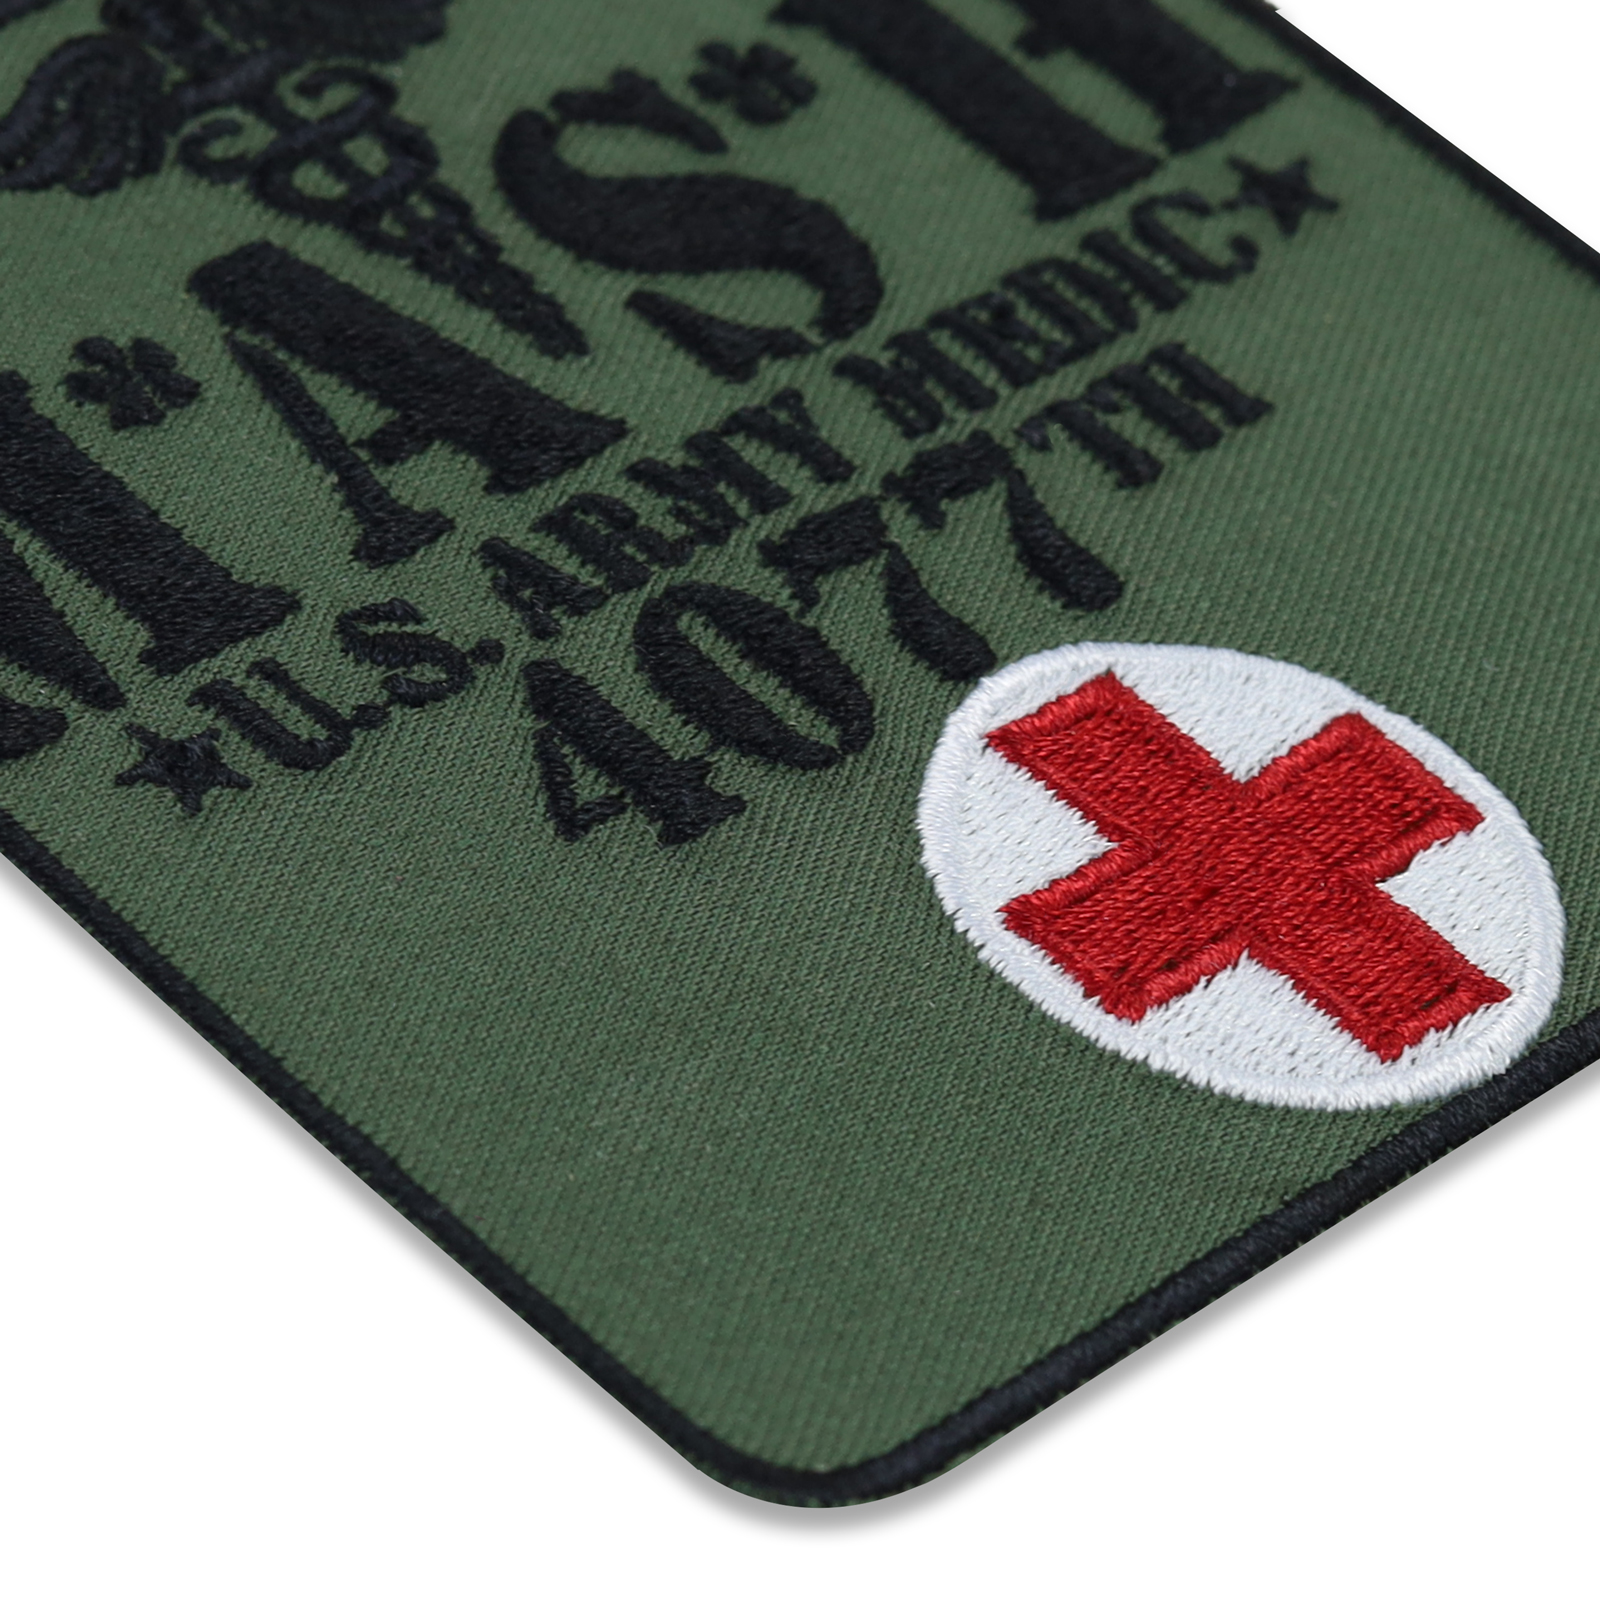 MASH US Army Medic 4077 - Patch